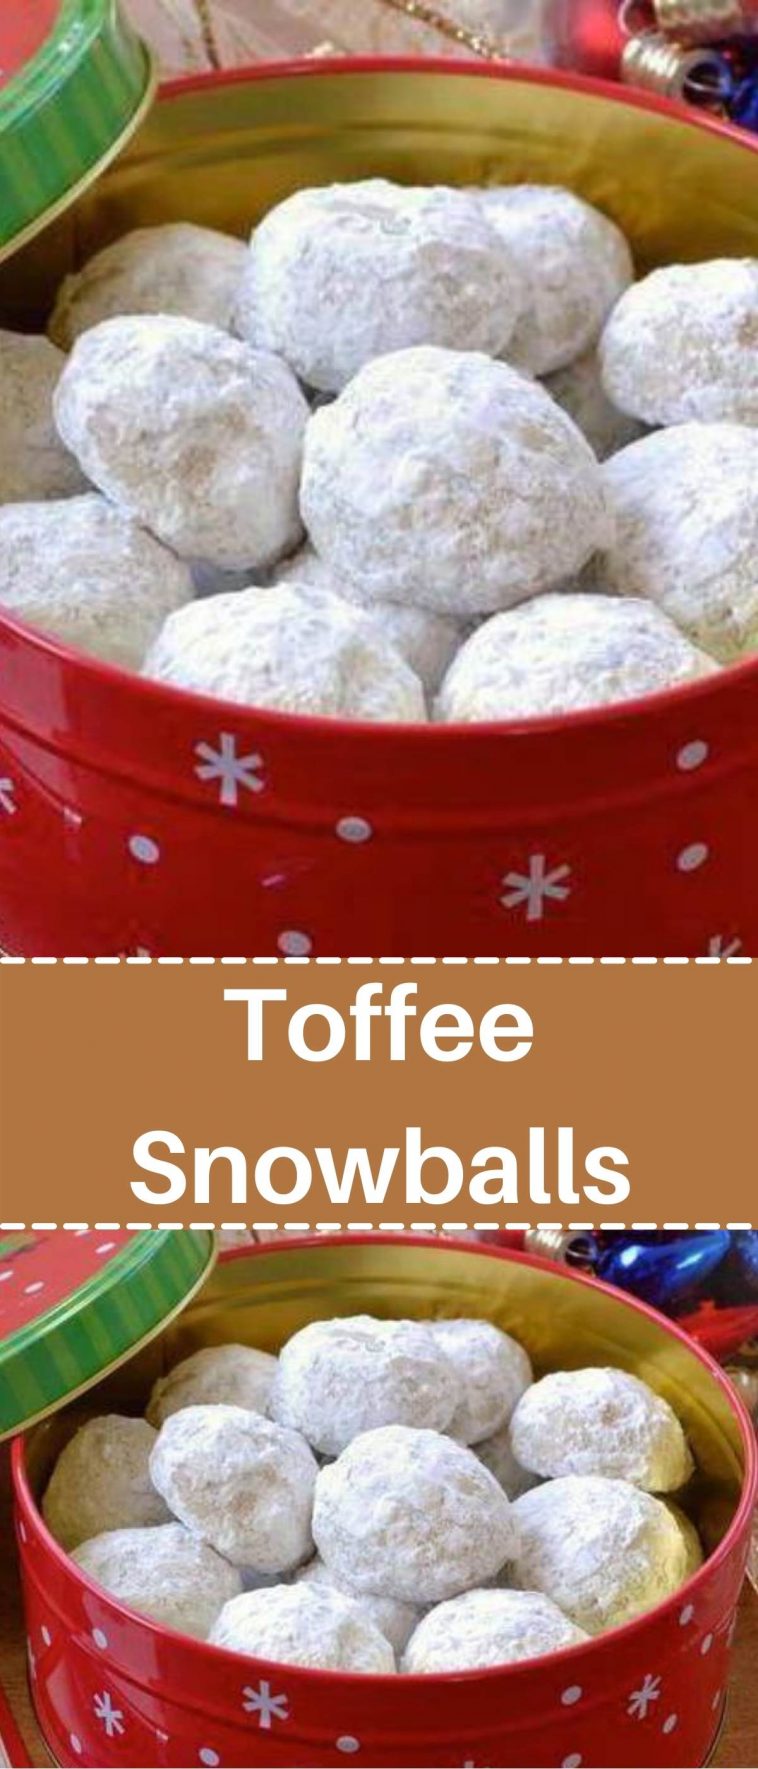 Toffee Snowballs